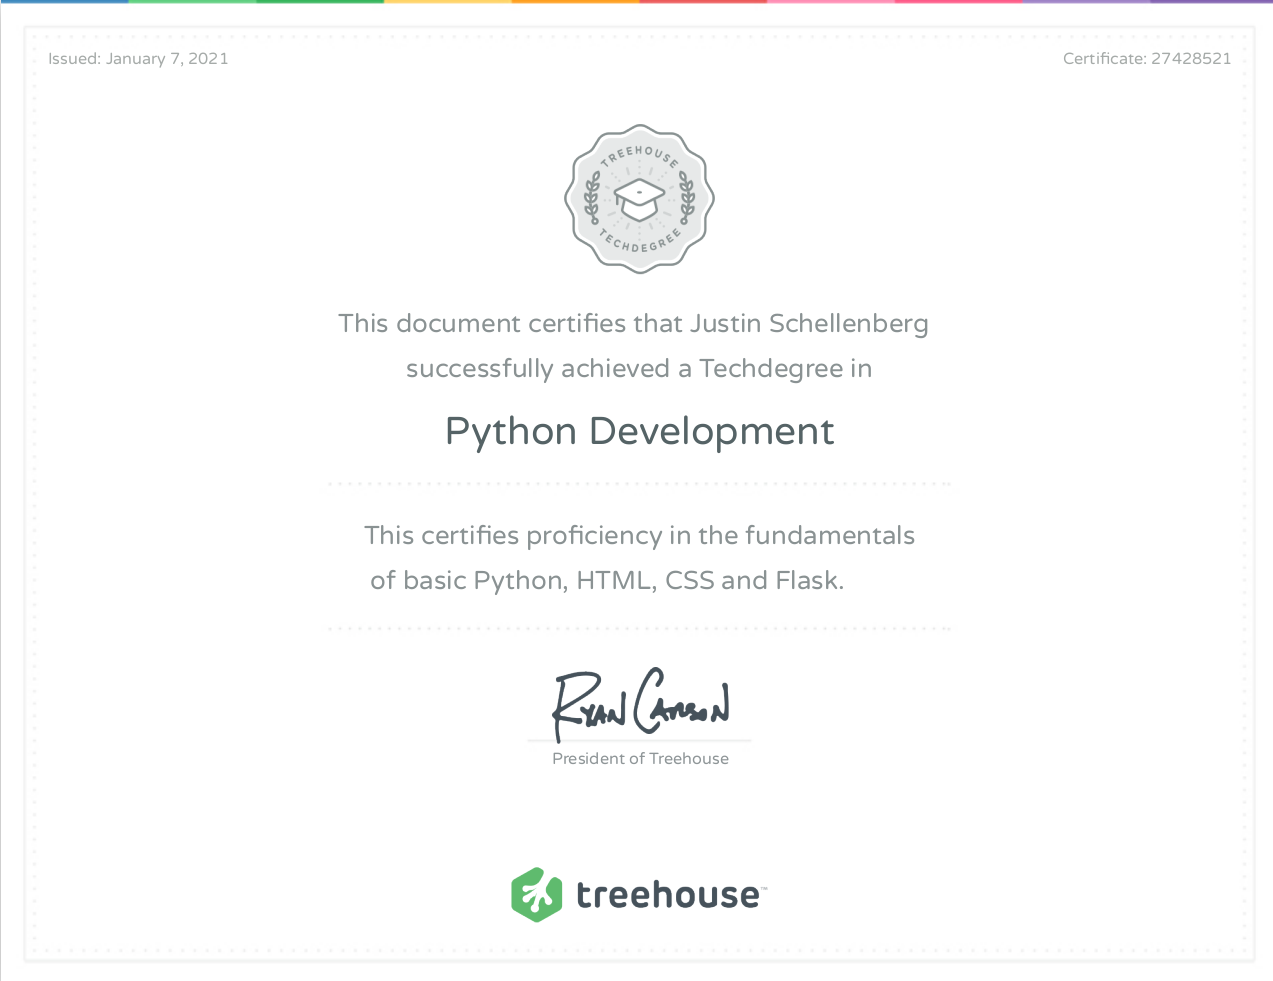 Python Developer Certification for Justin Schellenberg